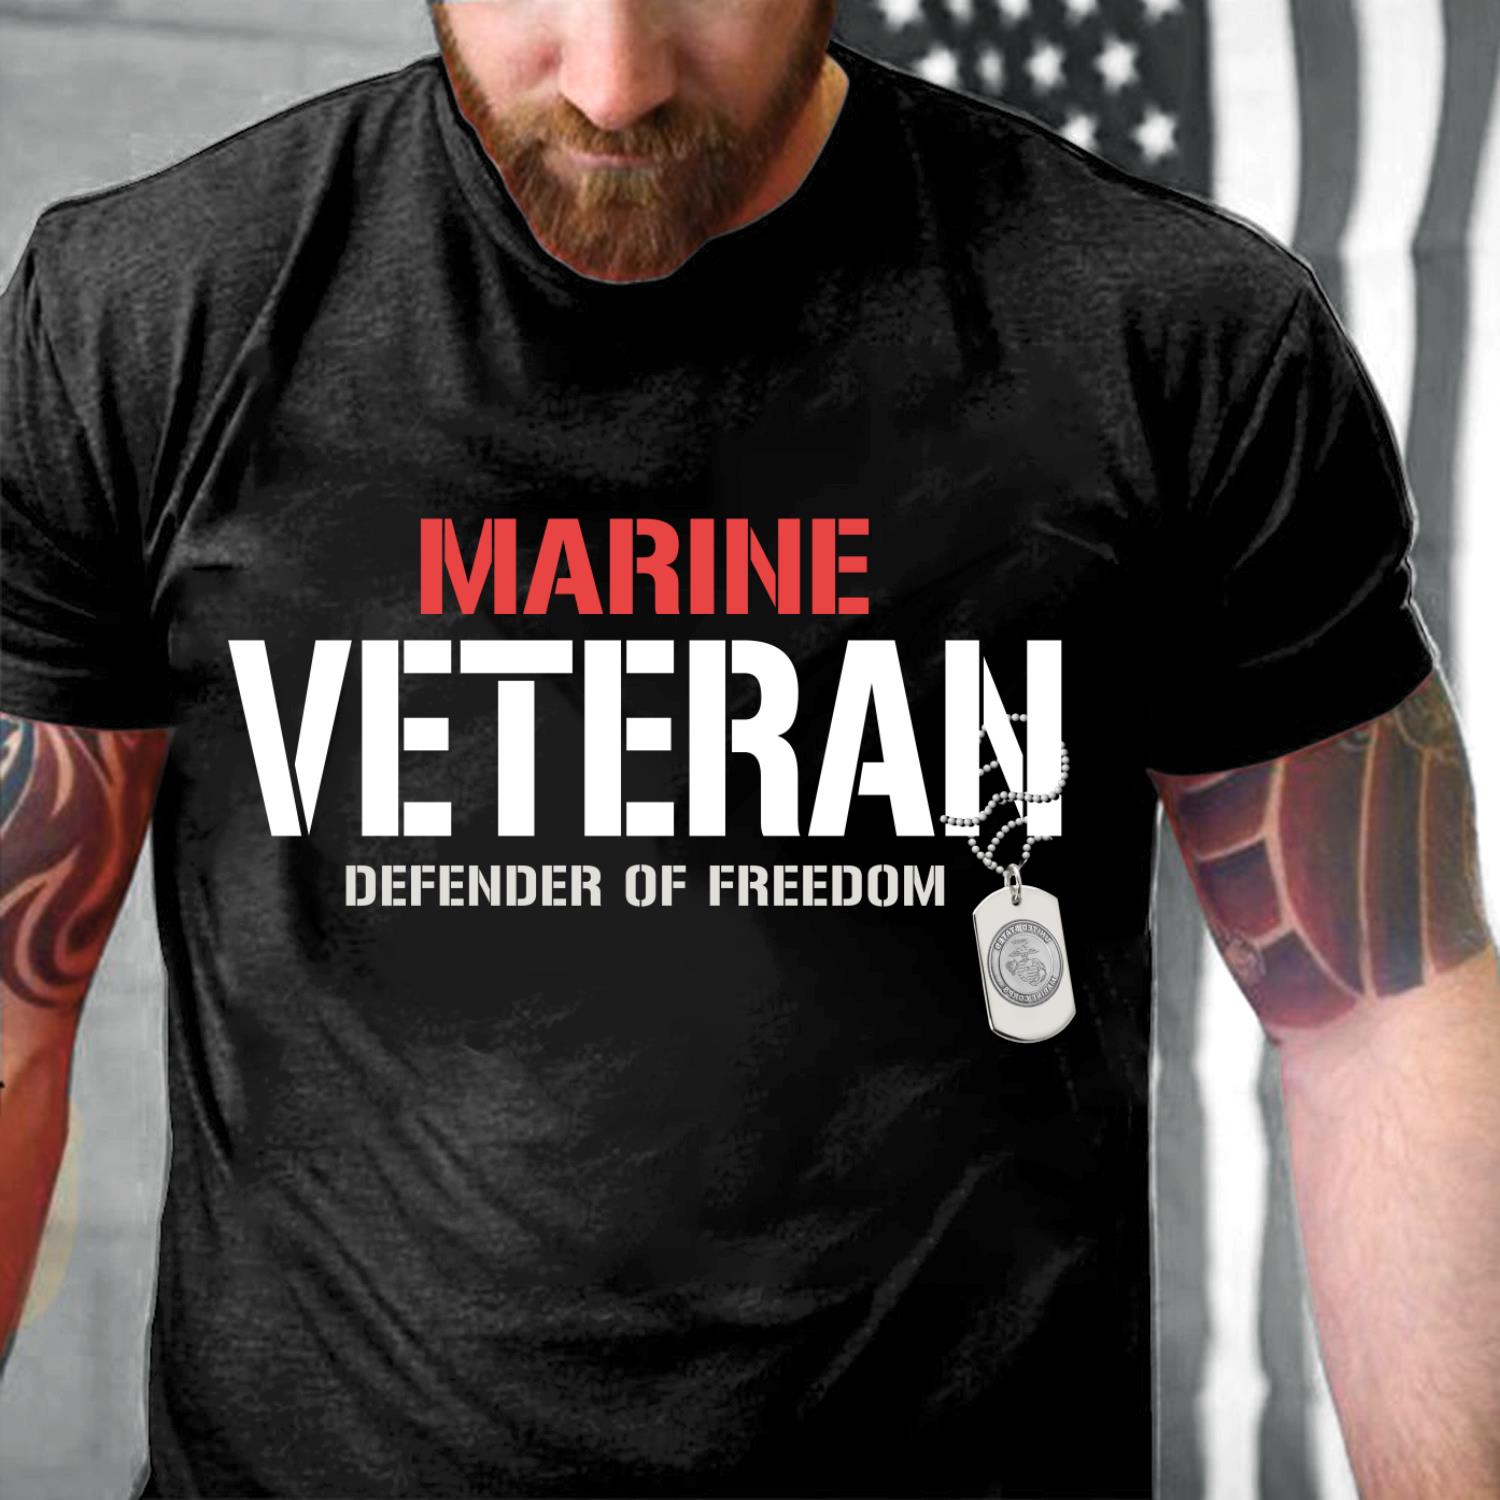 Marine Veterans Shirt Defender Of Freedom T-Shirt